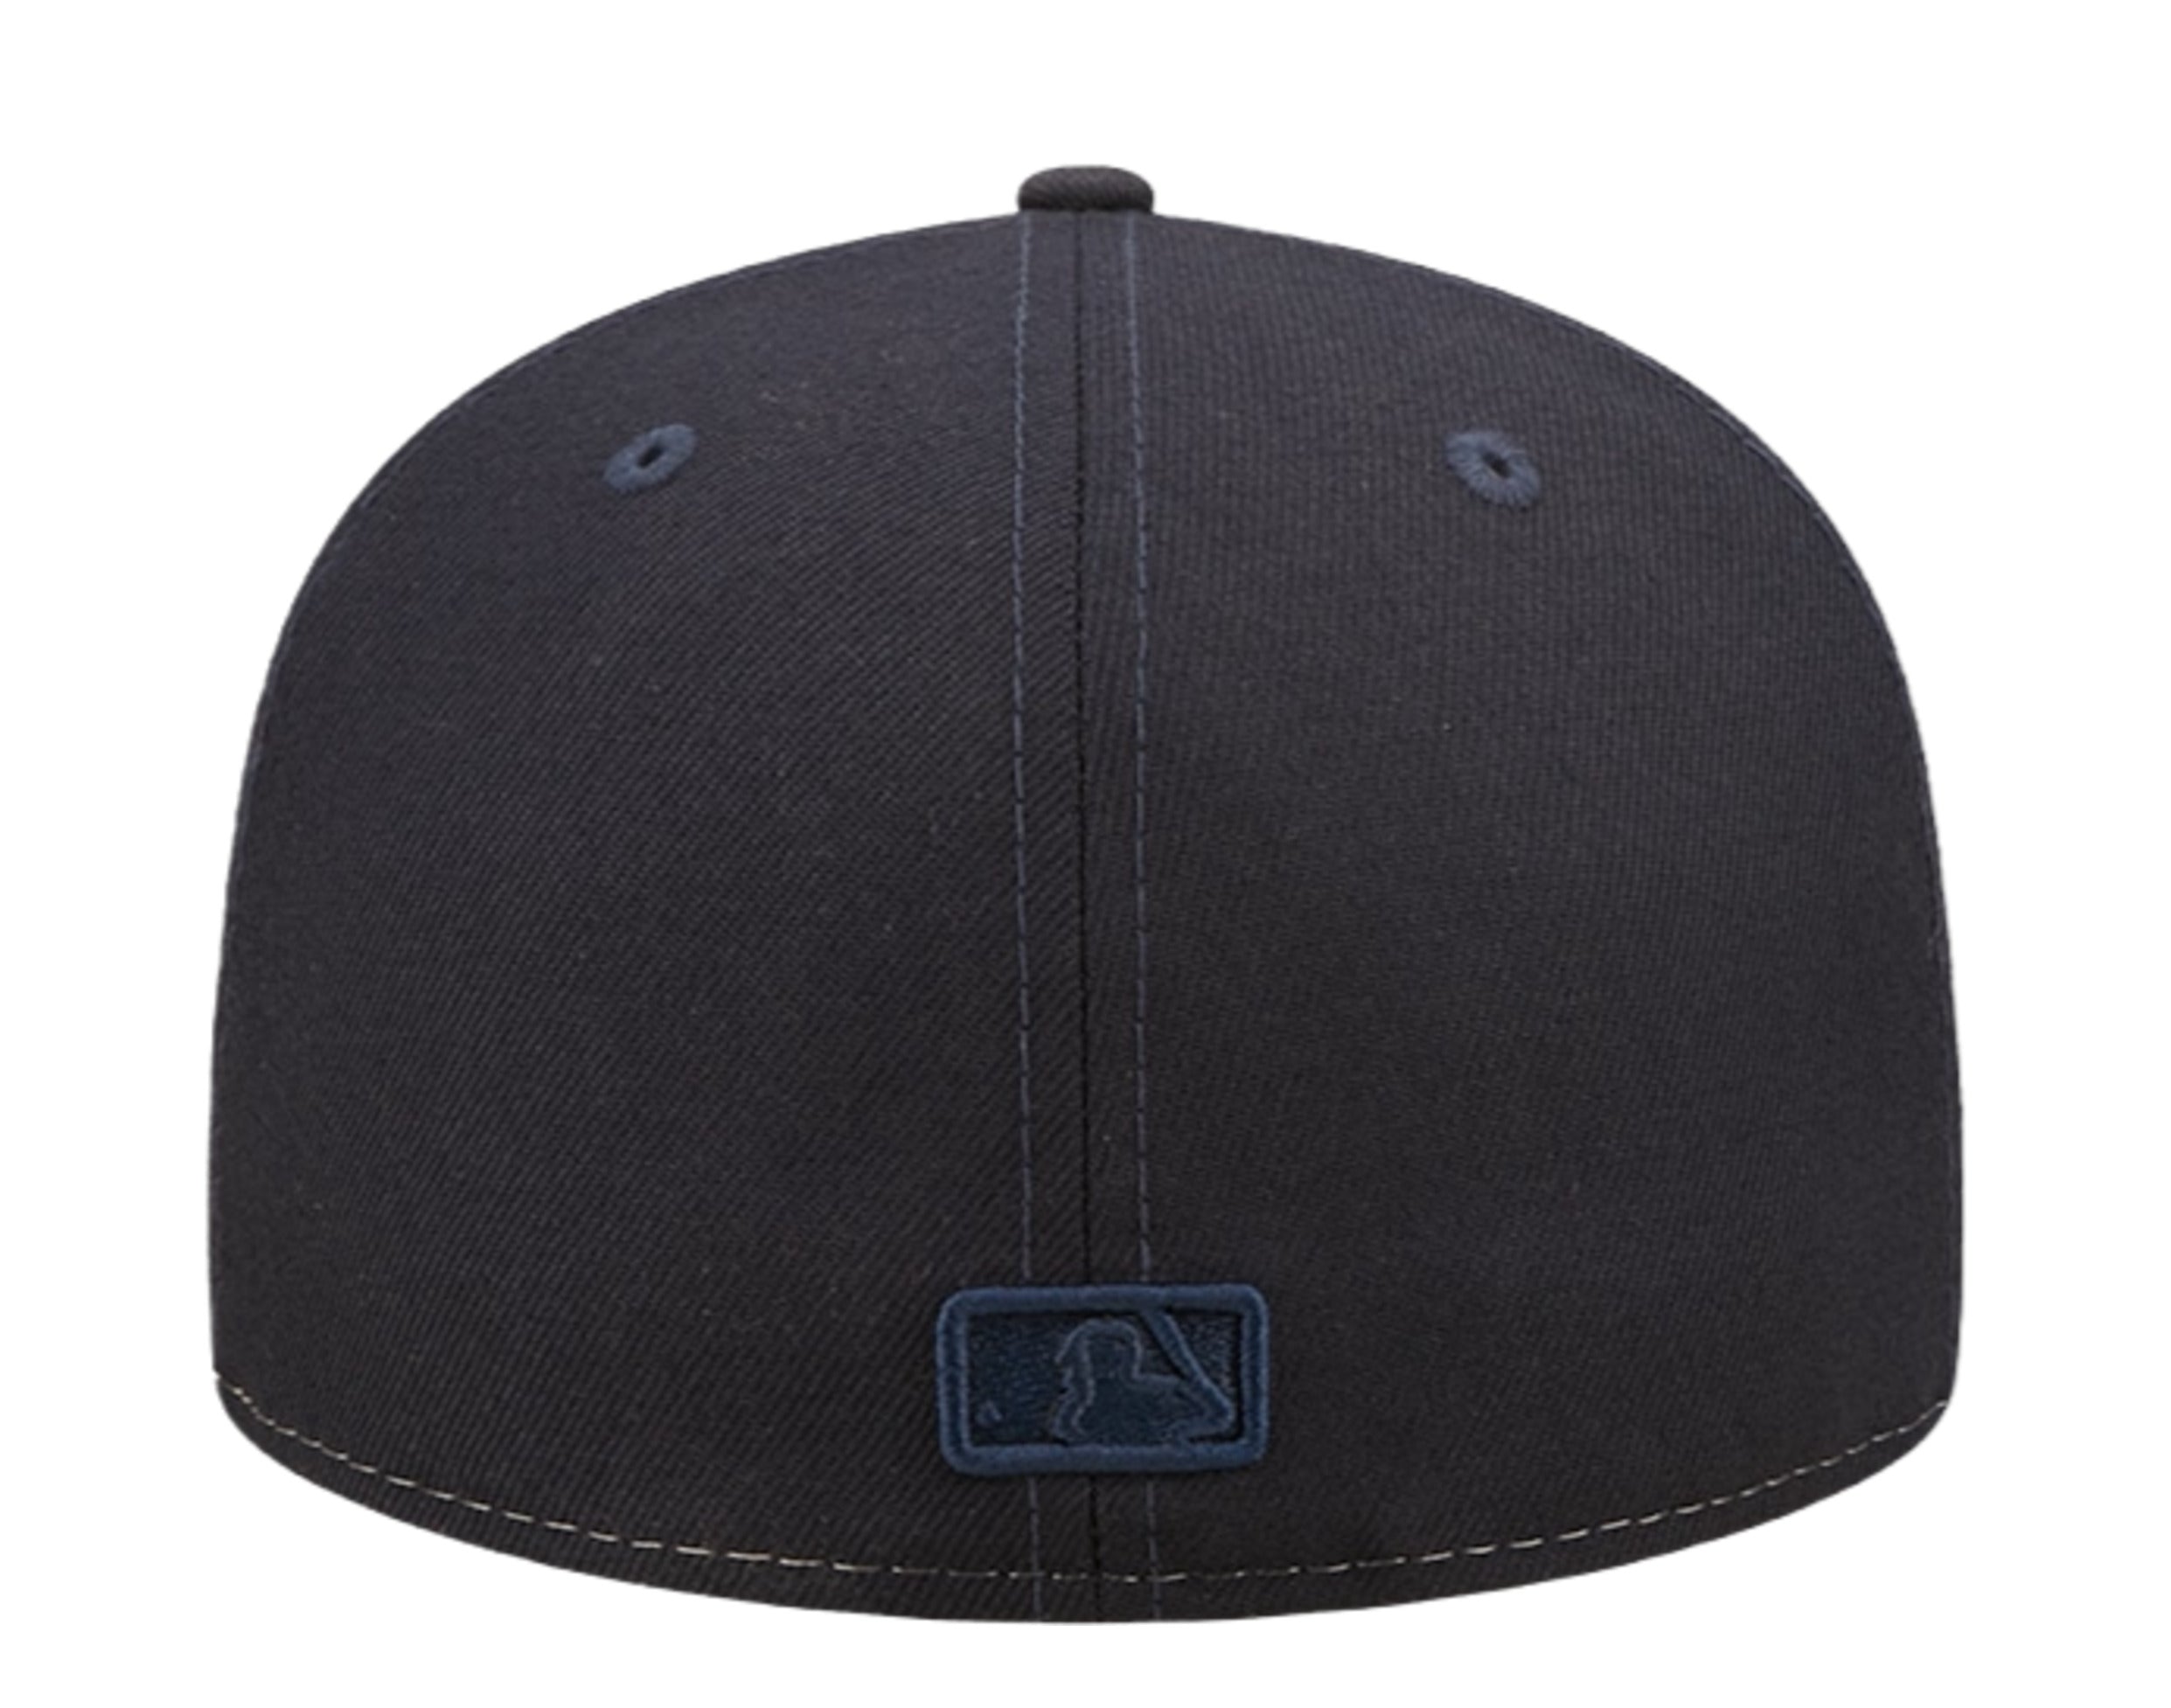 New York Yankees Purple New Era Fitted Hat 59Fifty - Size 7 5/8 MLB  baseball cap